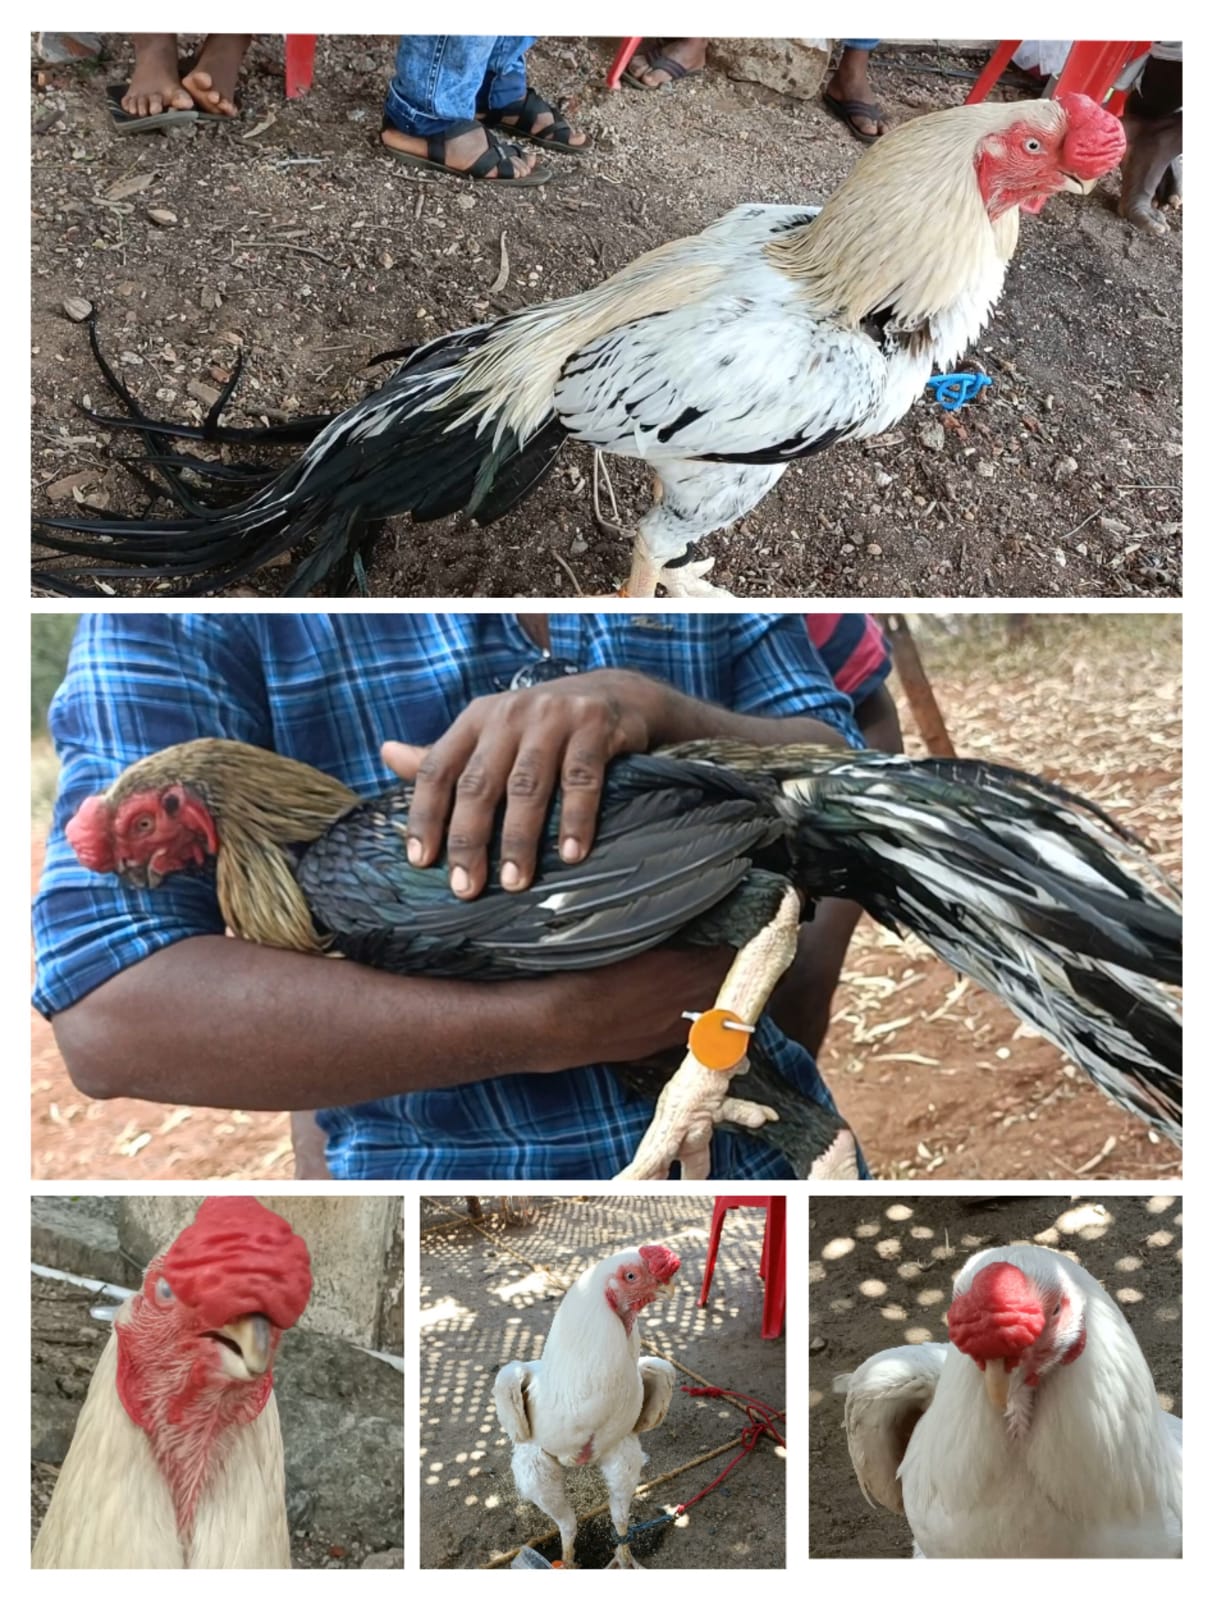 rooster exhibition was held in Tamil Nadu